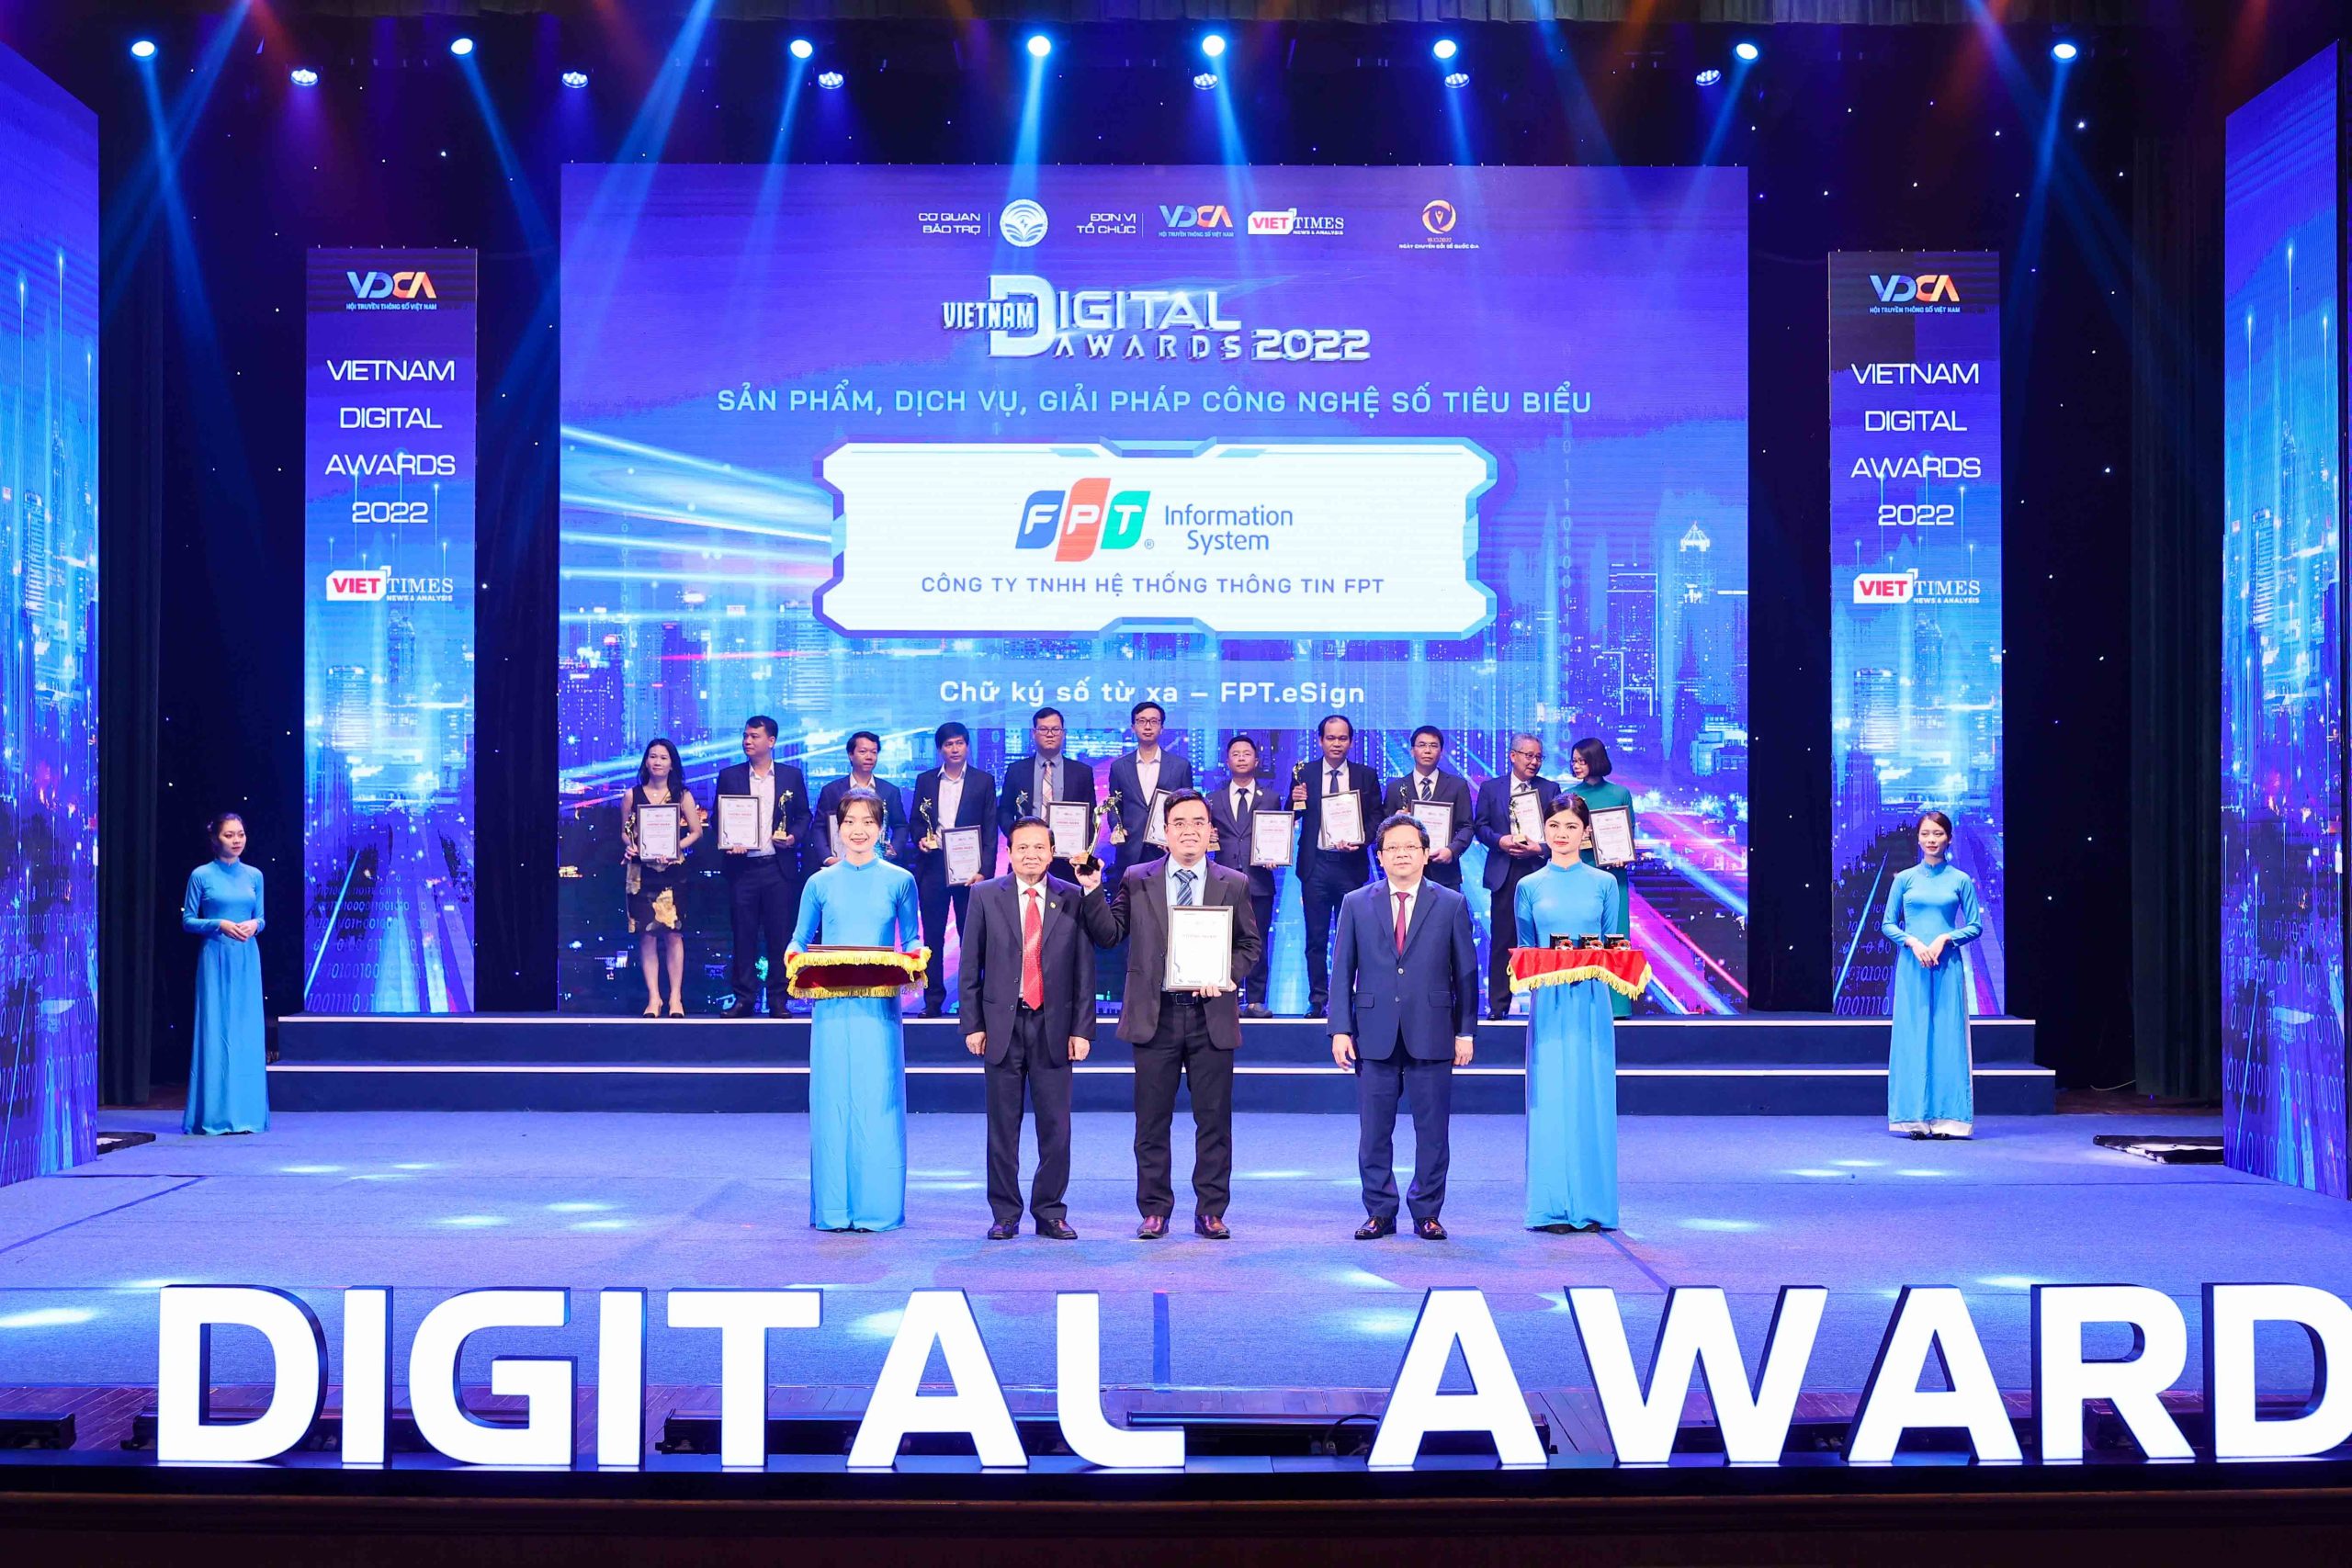 2022 Vietnam Digital Awards – Remote Signing Solution (FPT.eSign)